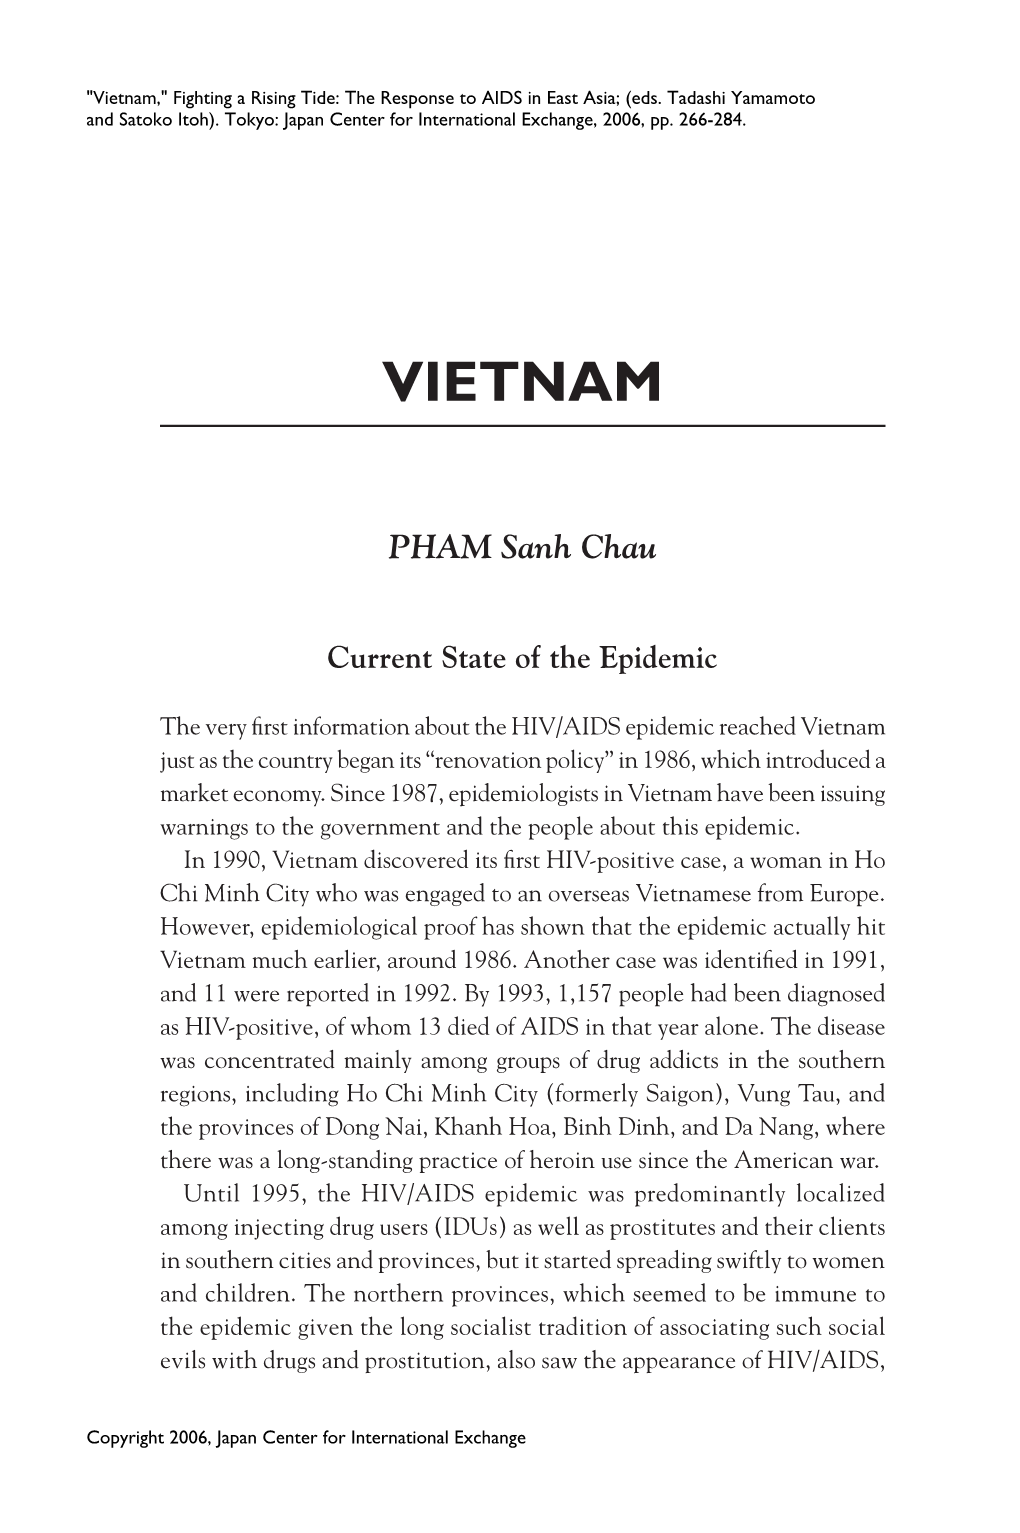 Vietnam's Response to HIV/AIDS